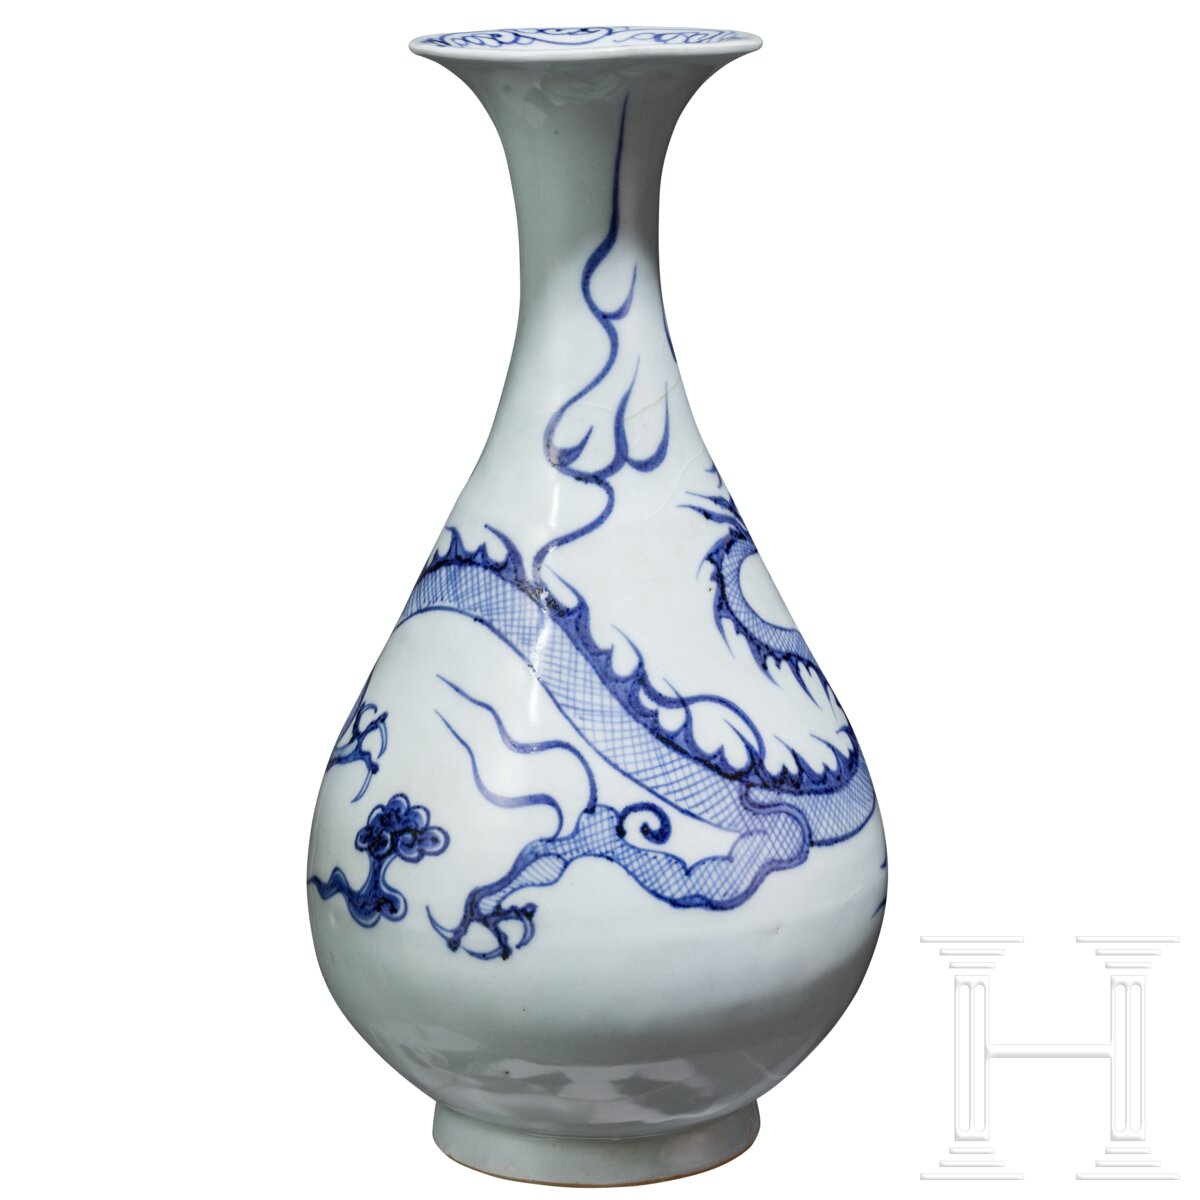 Birnenförmige blau-weiße Vase (Ping) mit Drache, China, wohl Yuan-Dynastie - Image 2 of 10